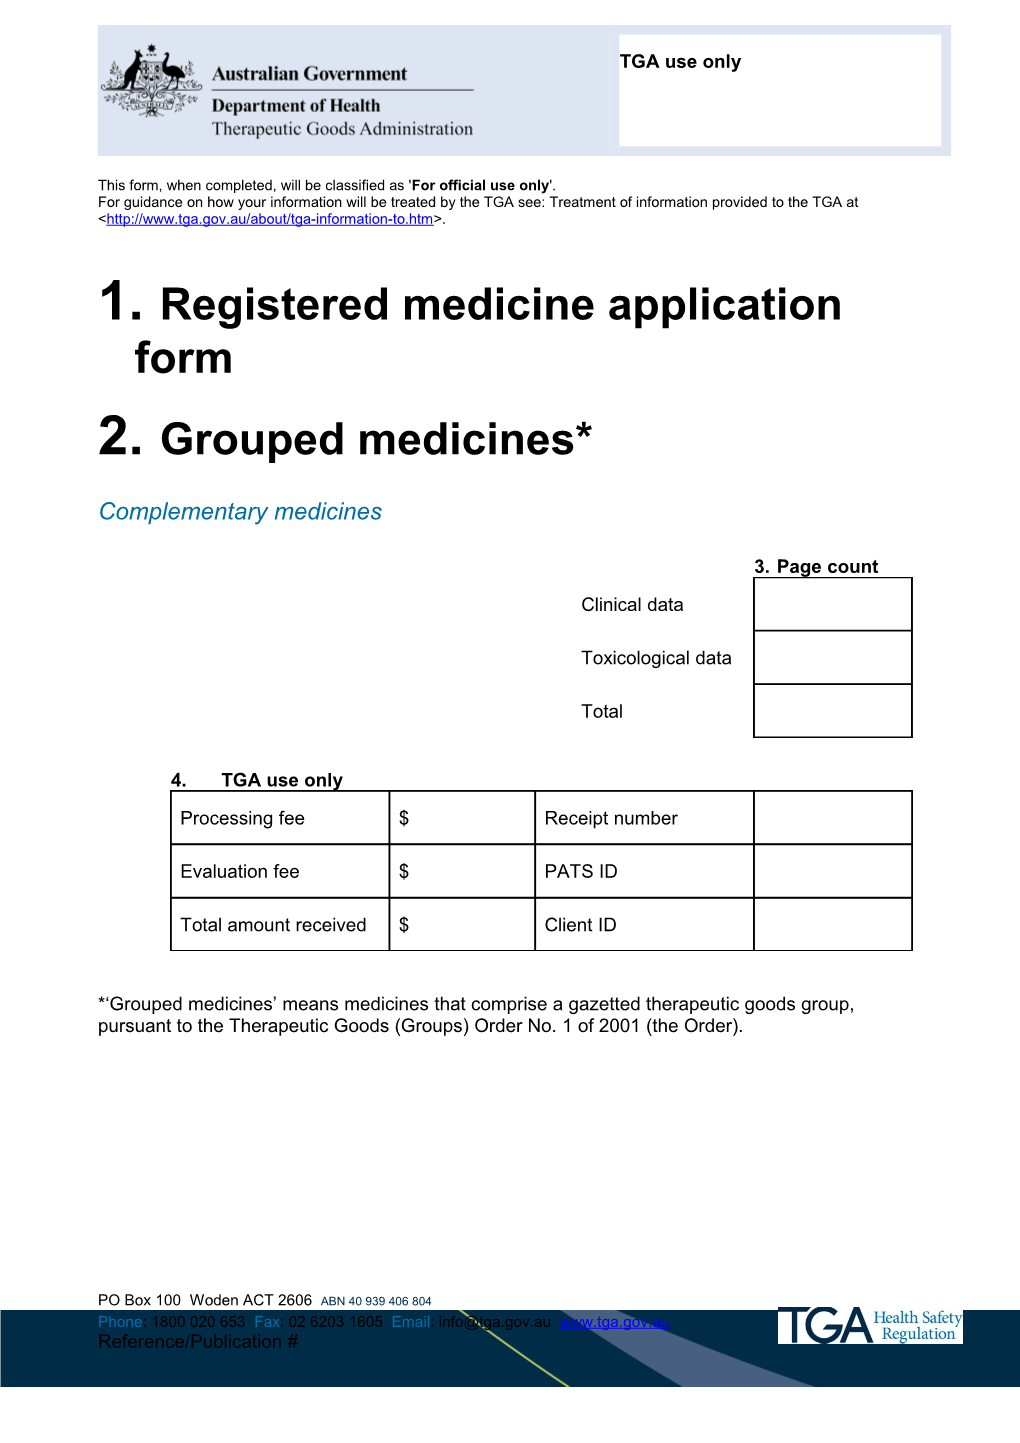 Registered Medicine Application Form - Grouped Medicines: Complementary Medicines